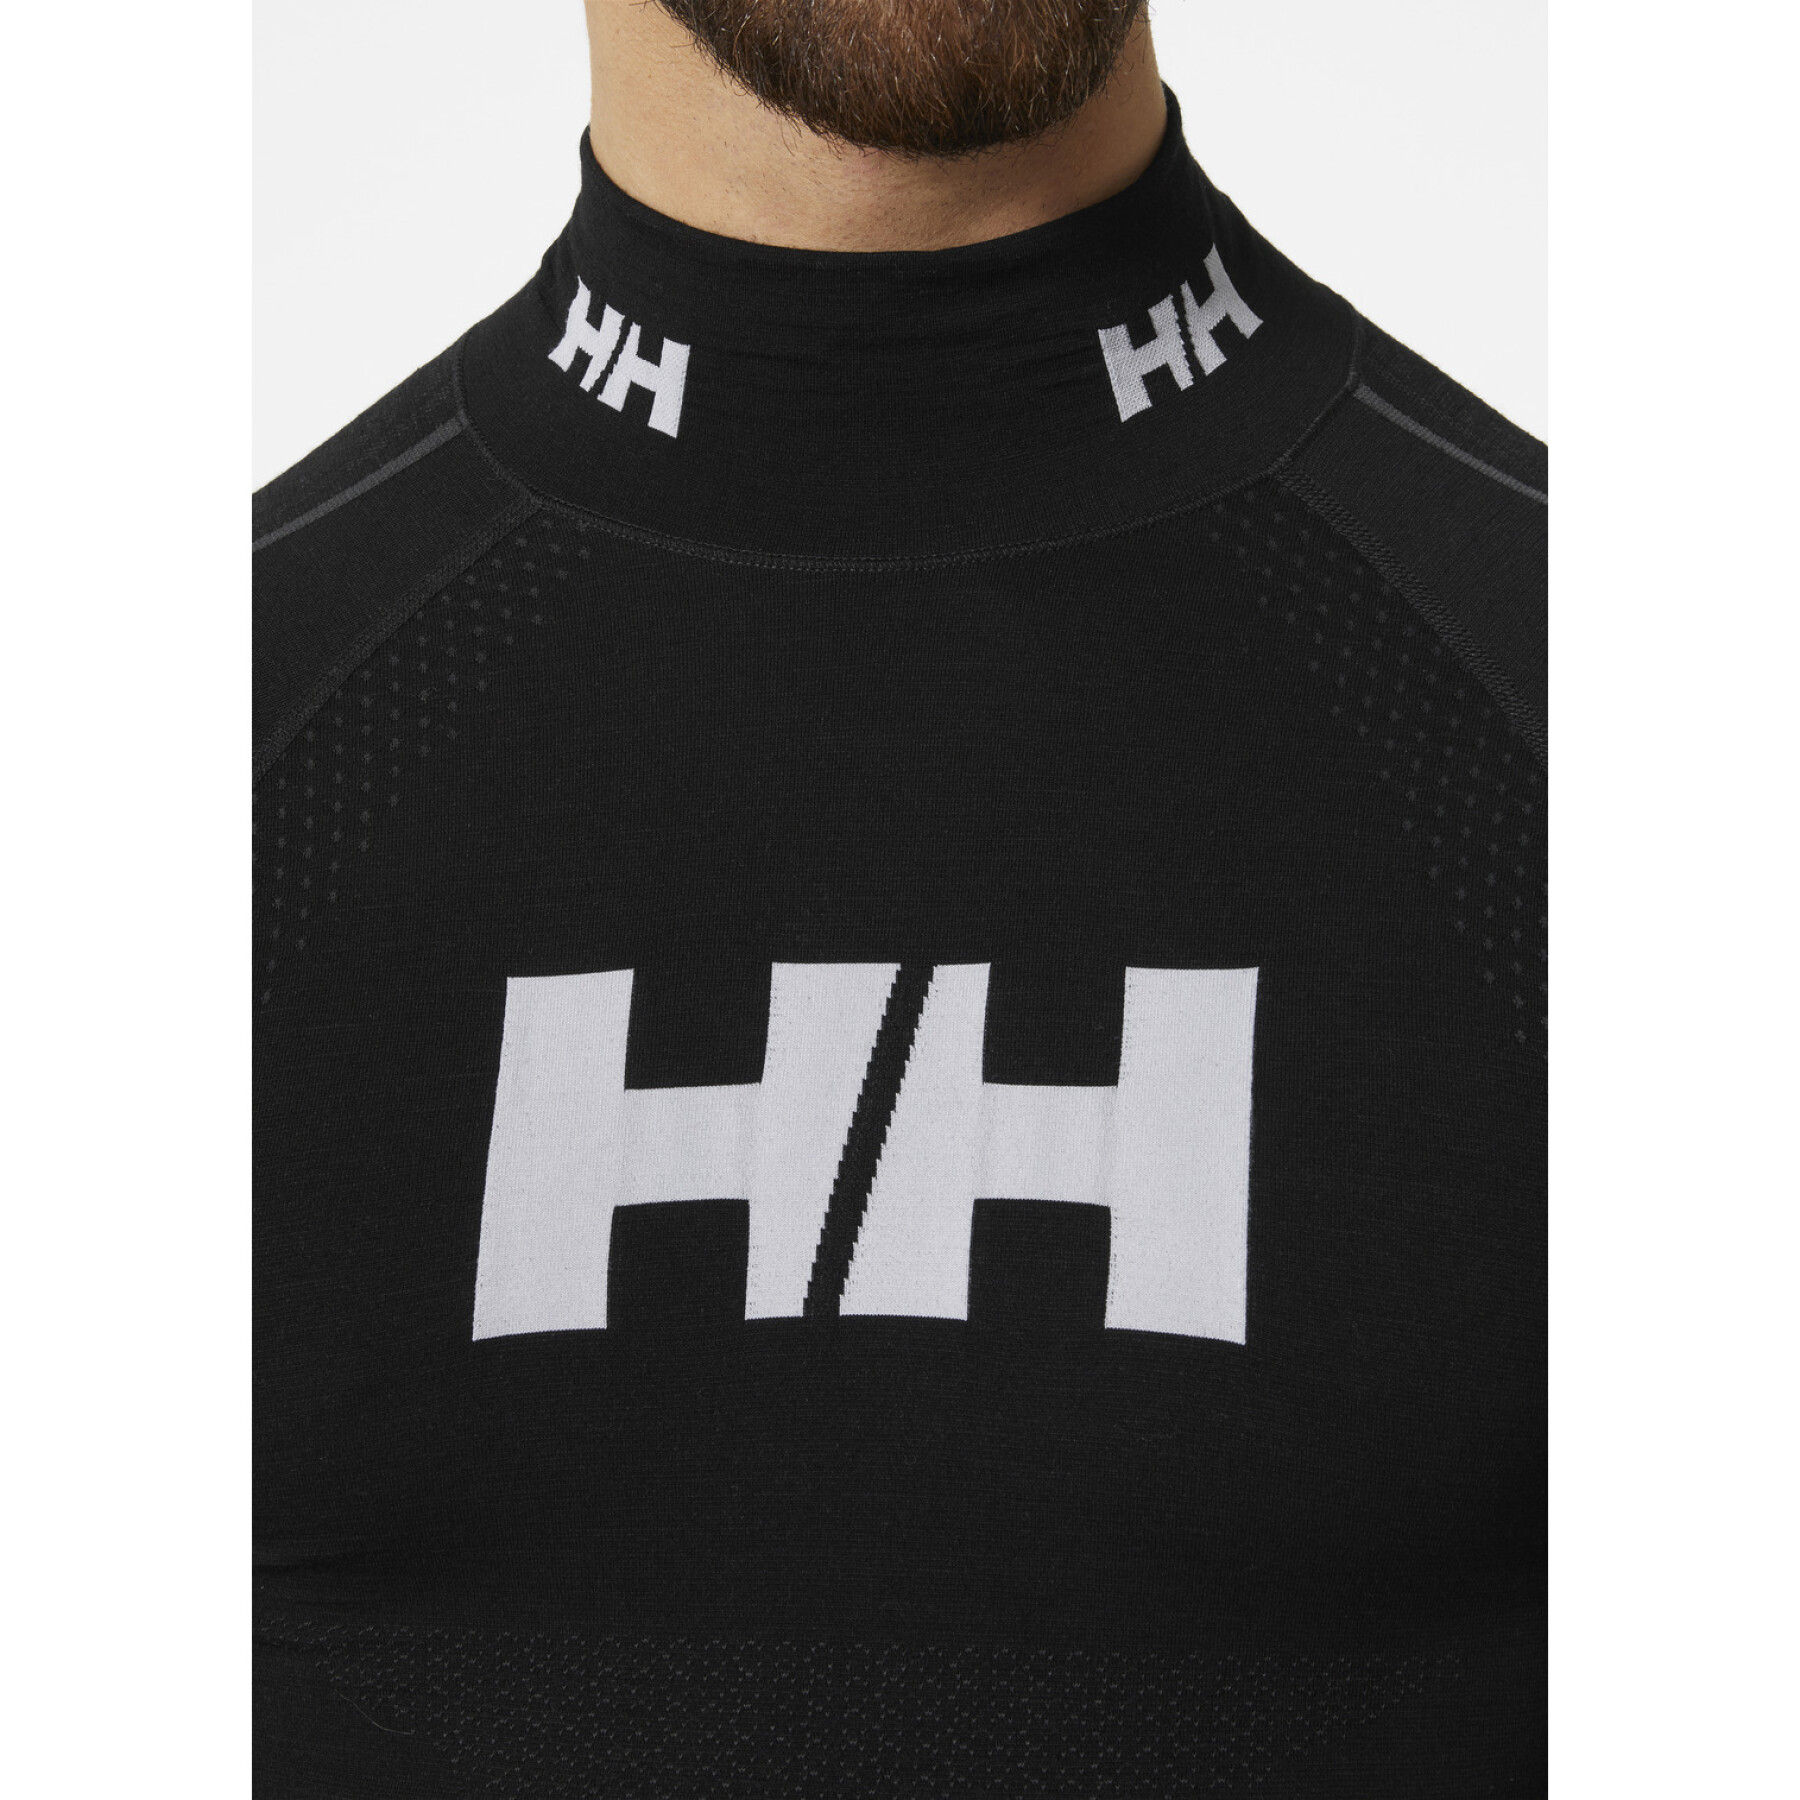 Felpa Helly Hansen h1 pro lifa merino race top